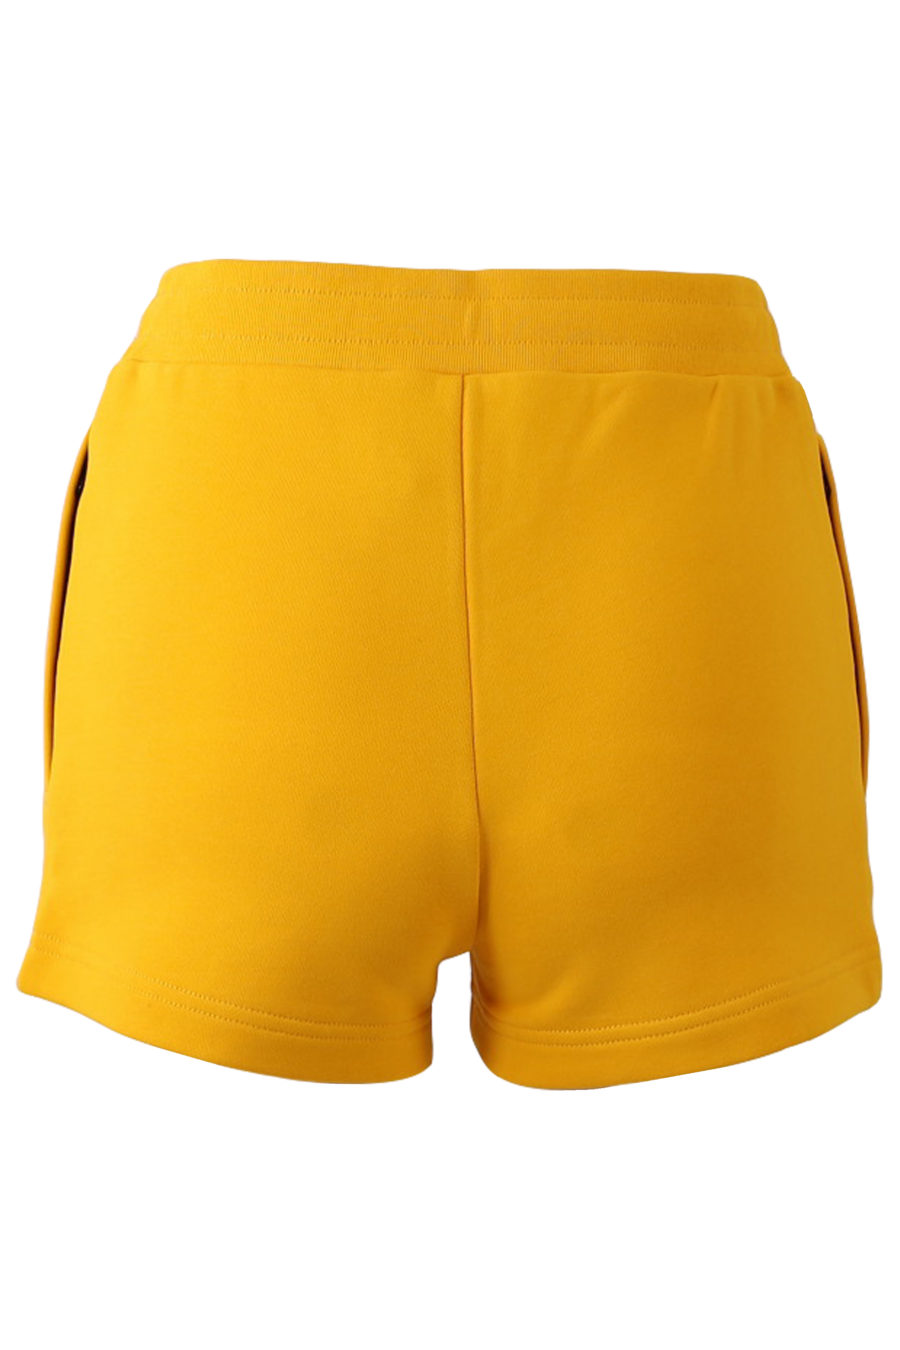 Orangefarbene Shorts mit schwarzem Logo - e0a9a8a8c2854770e381c50be2d7349f6e00103b06